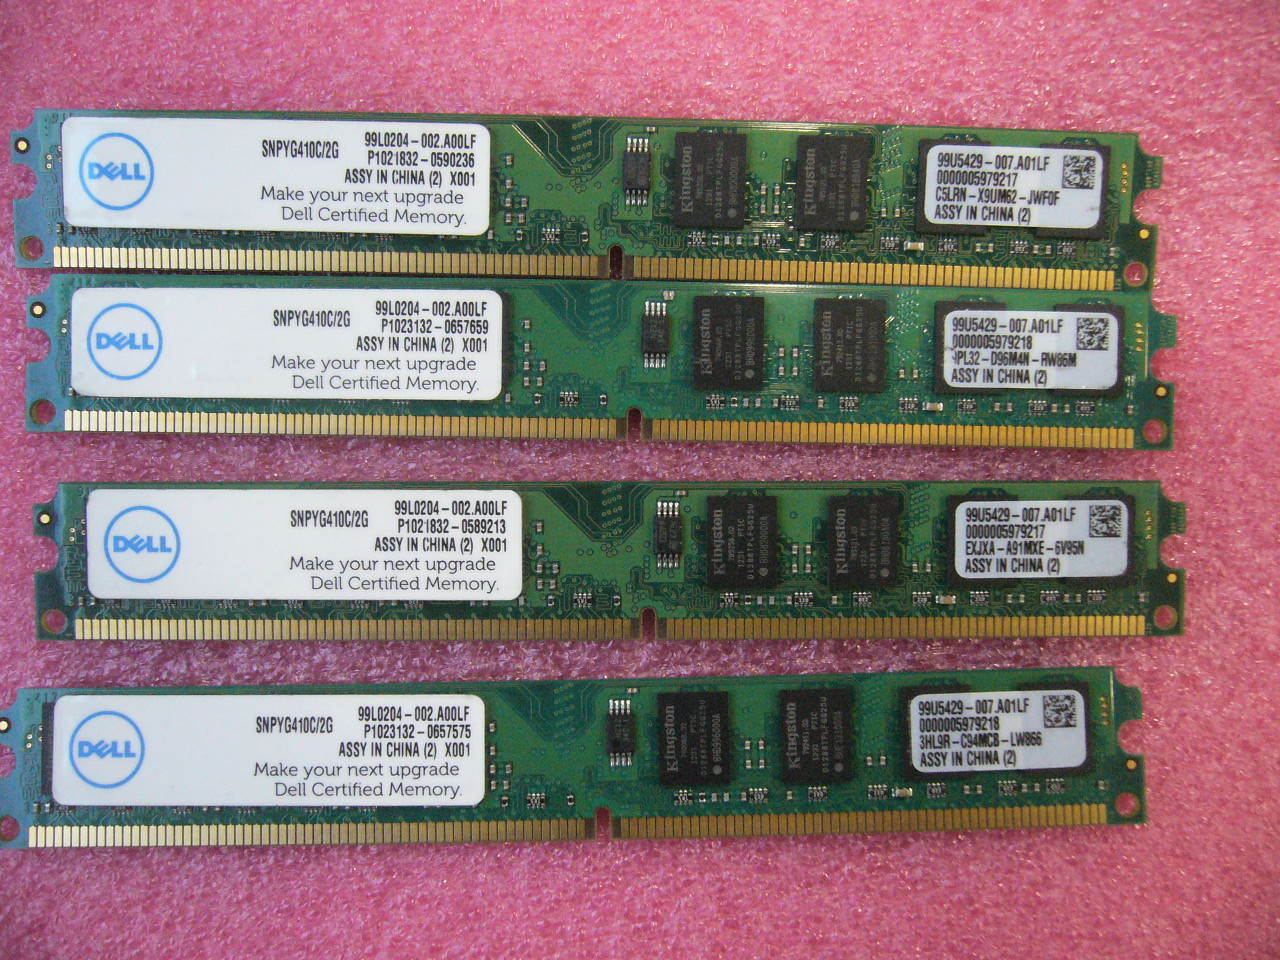 QTY 1x Dell 2GB DDR2 800Mhz non-ECC desktop mem SNPYG410C/2G 99U5429-007.A01LF